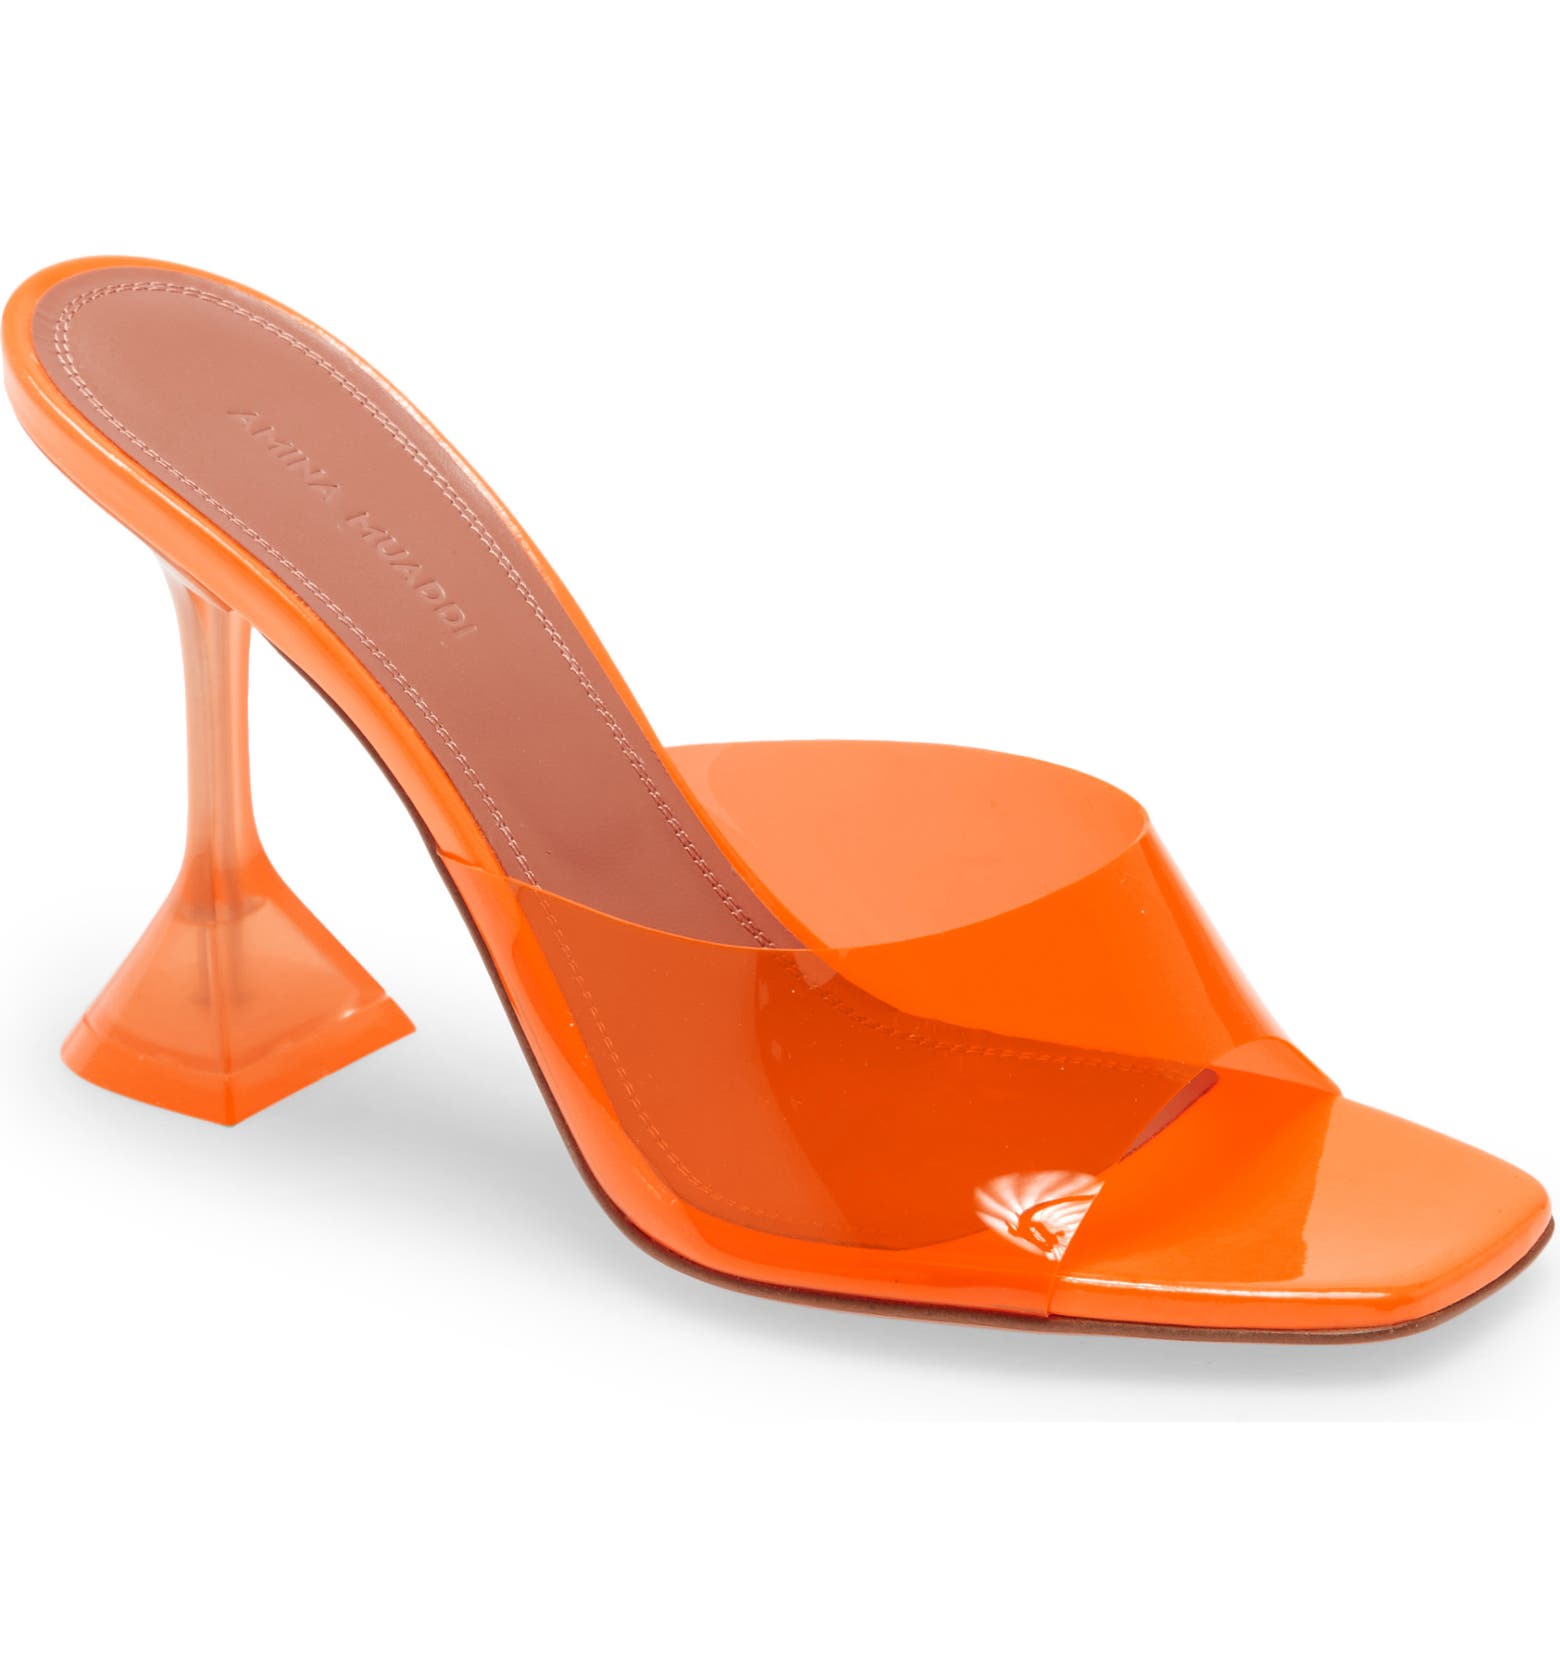 Orange Lupita jelly heels from Amina Muaddi